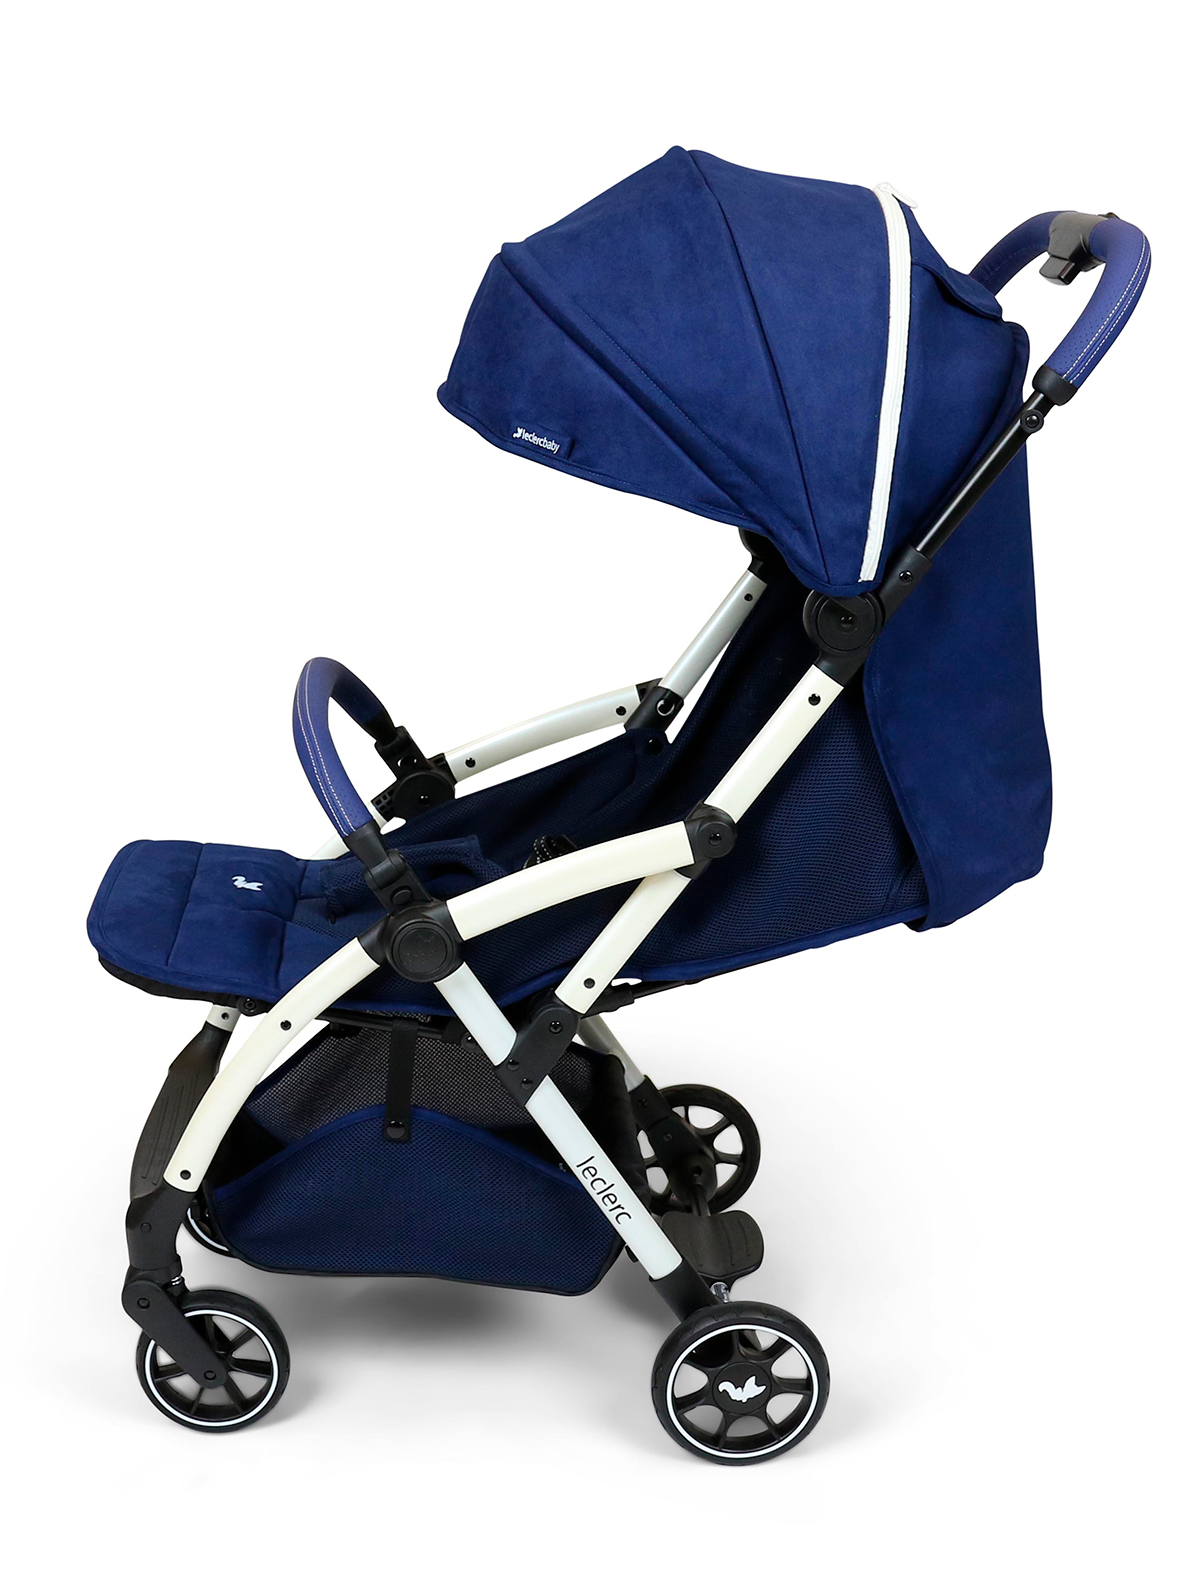 Коляска Leclerc baby 2546569, цвет синий, размер 6 4004529370022 - фото 3